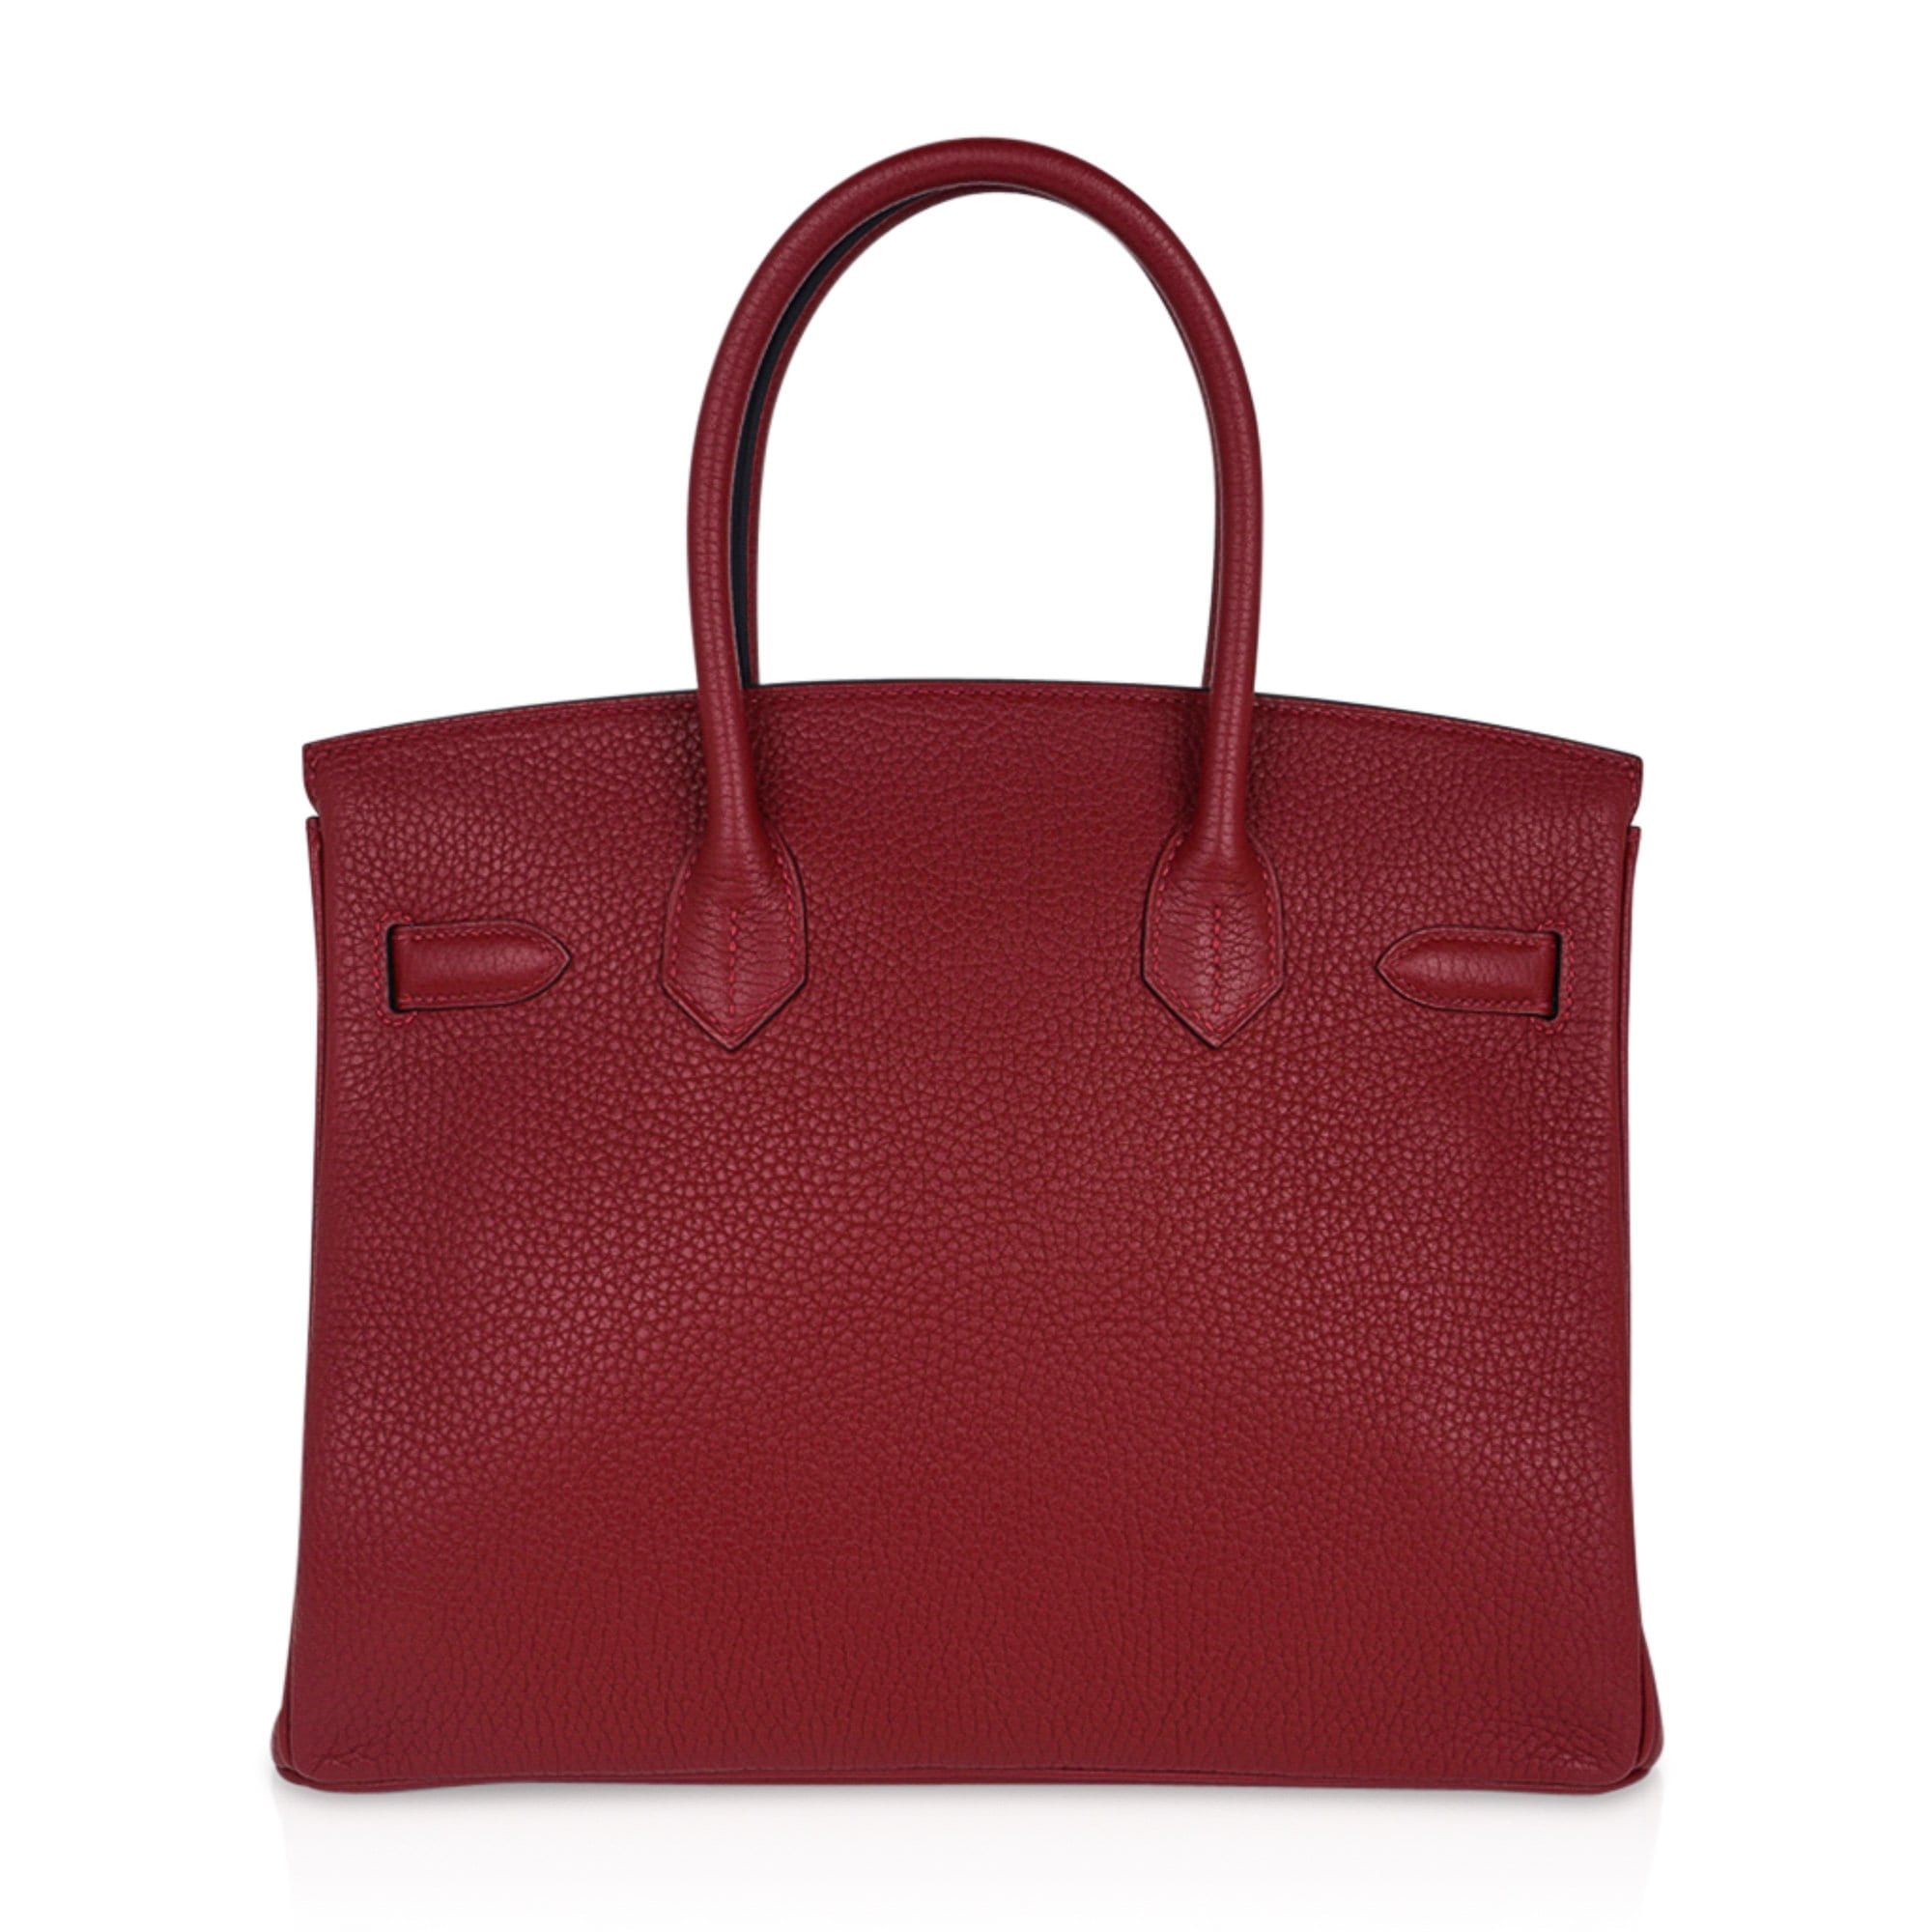 Hermès Birkin 30 Rouge Casaque - Designer WishBags